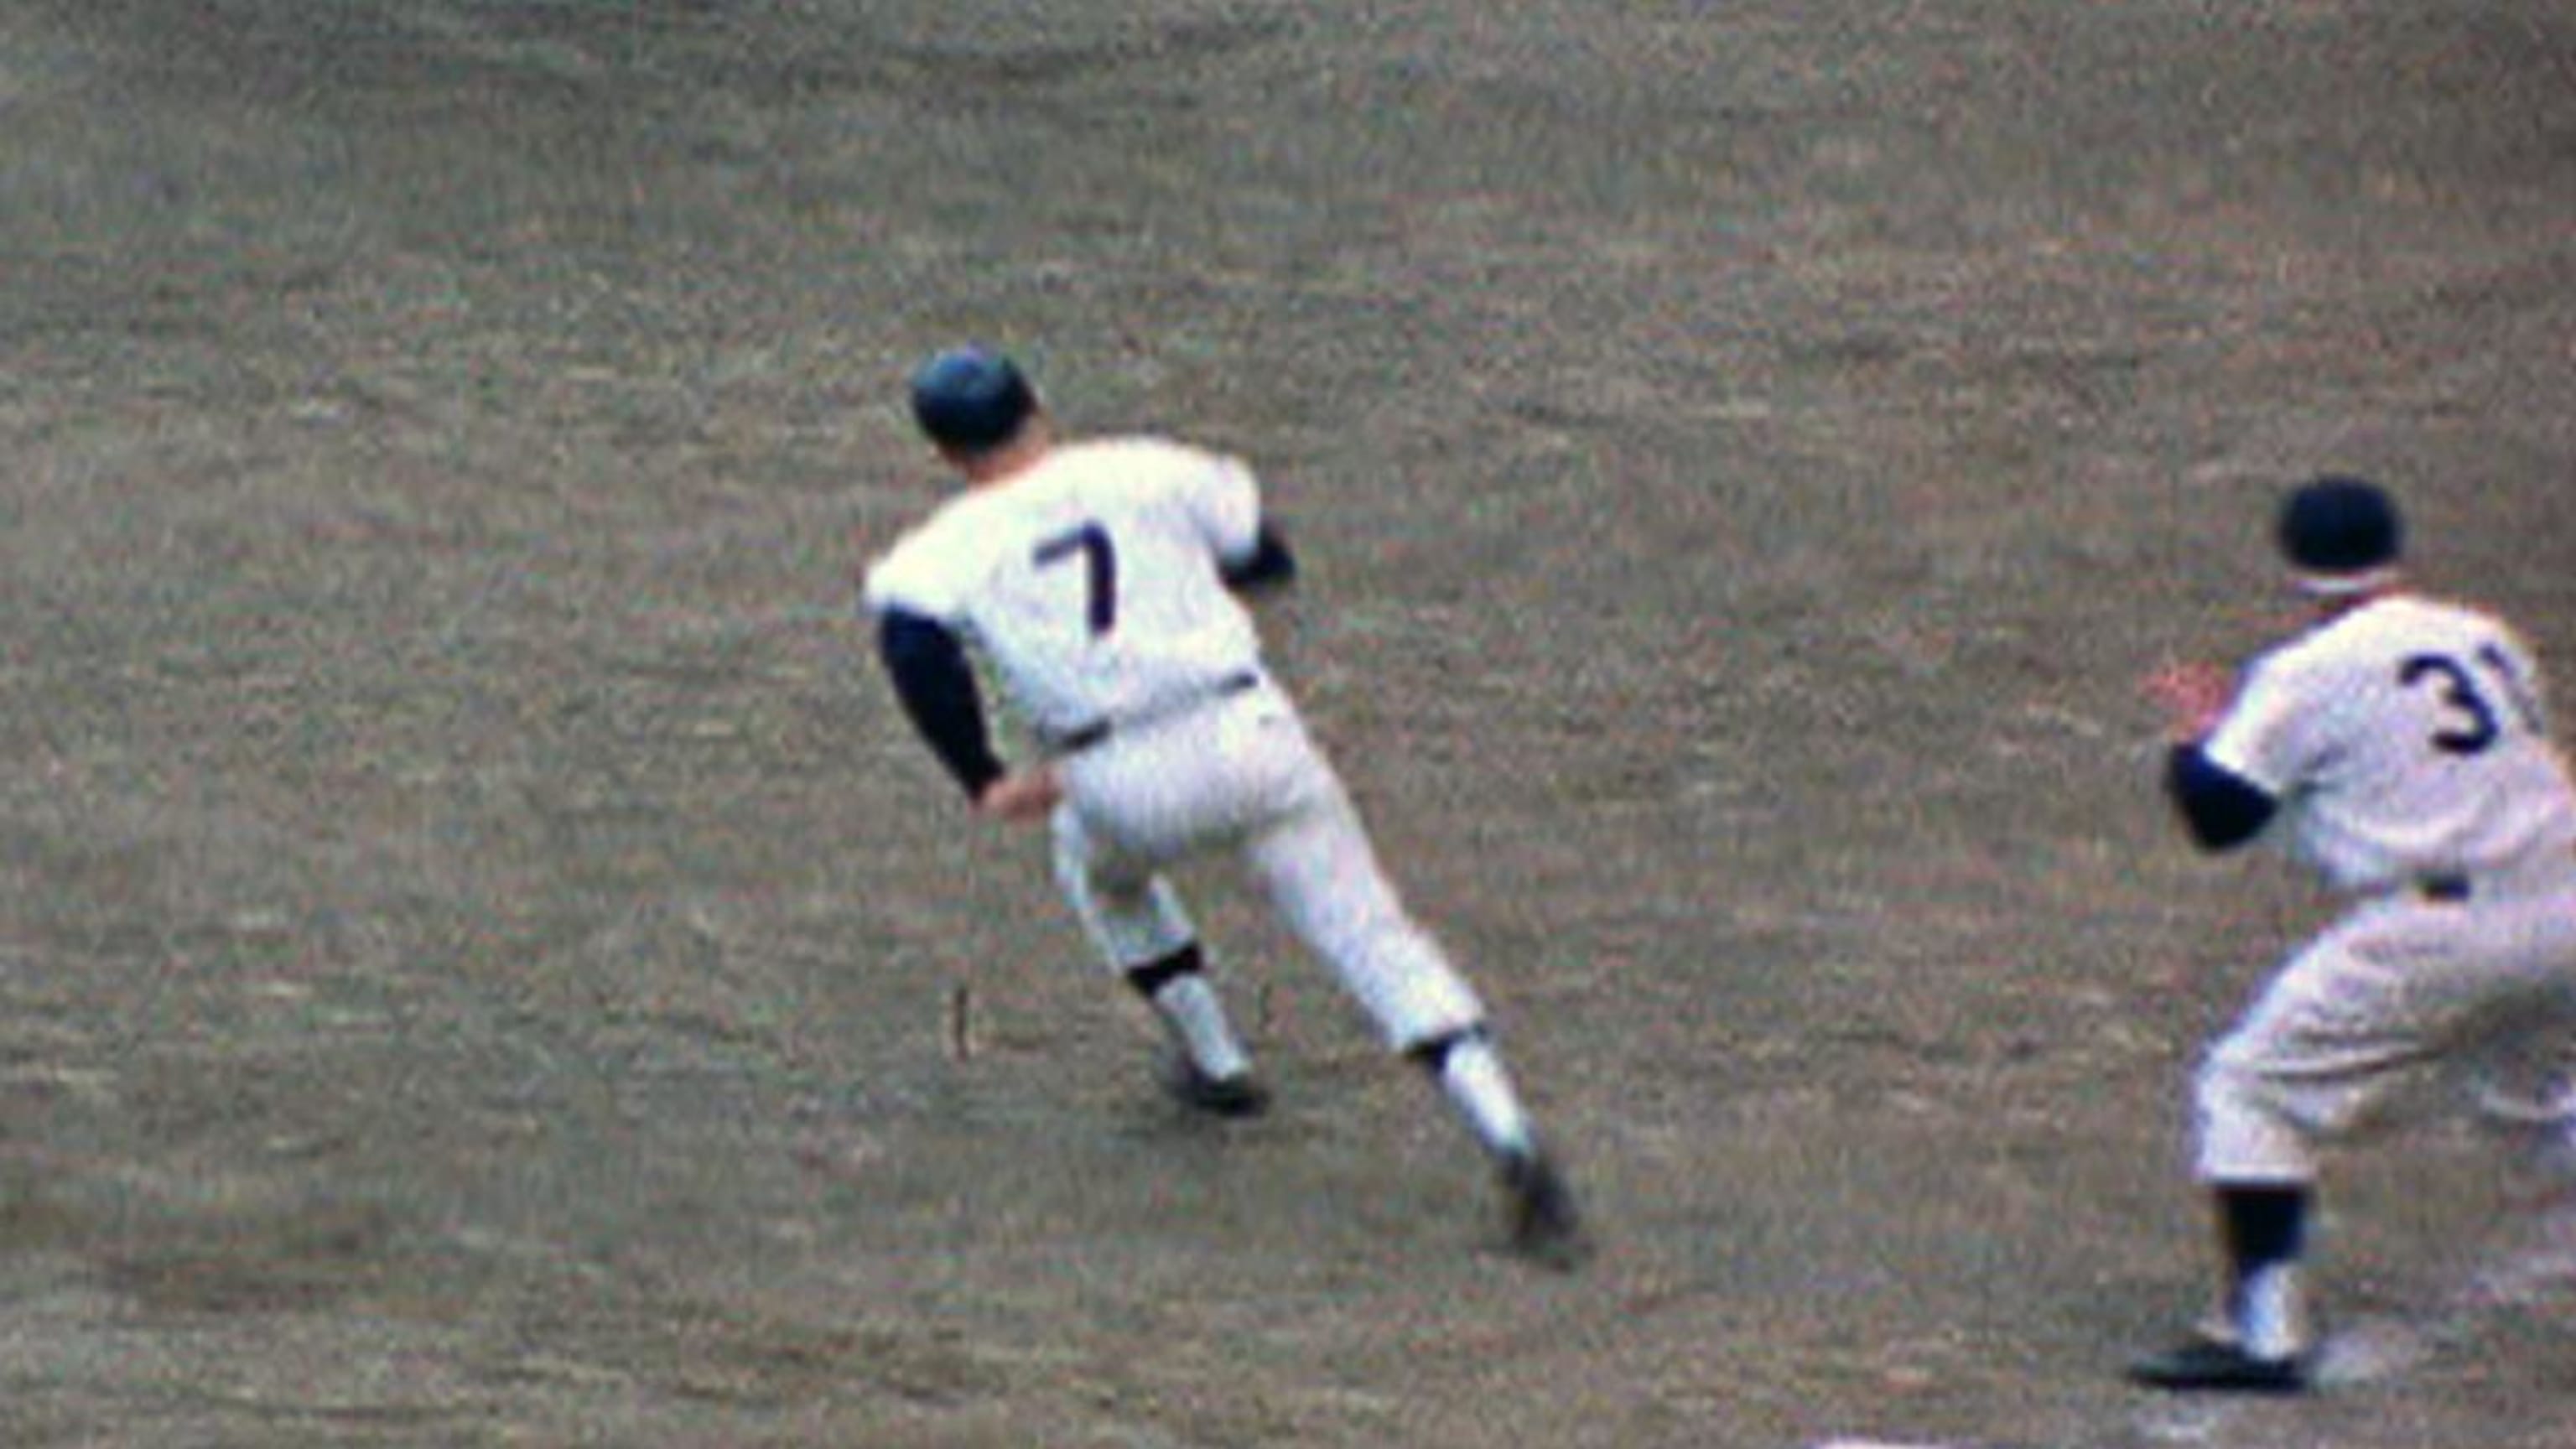 1964 World Series recap